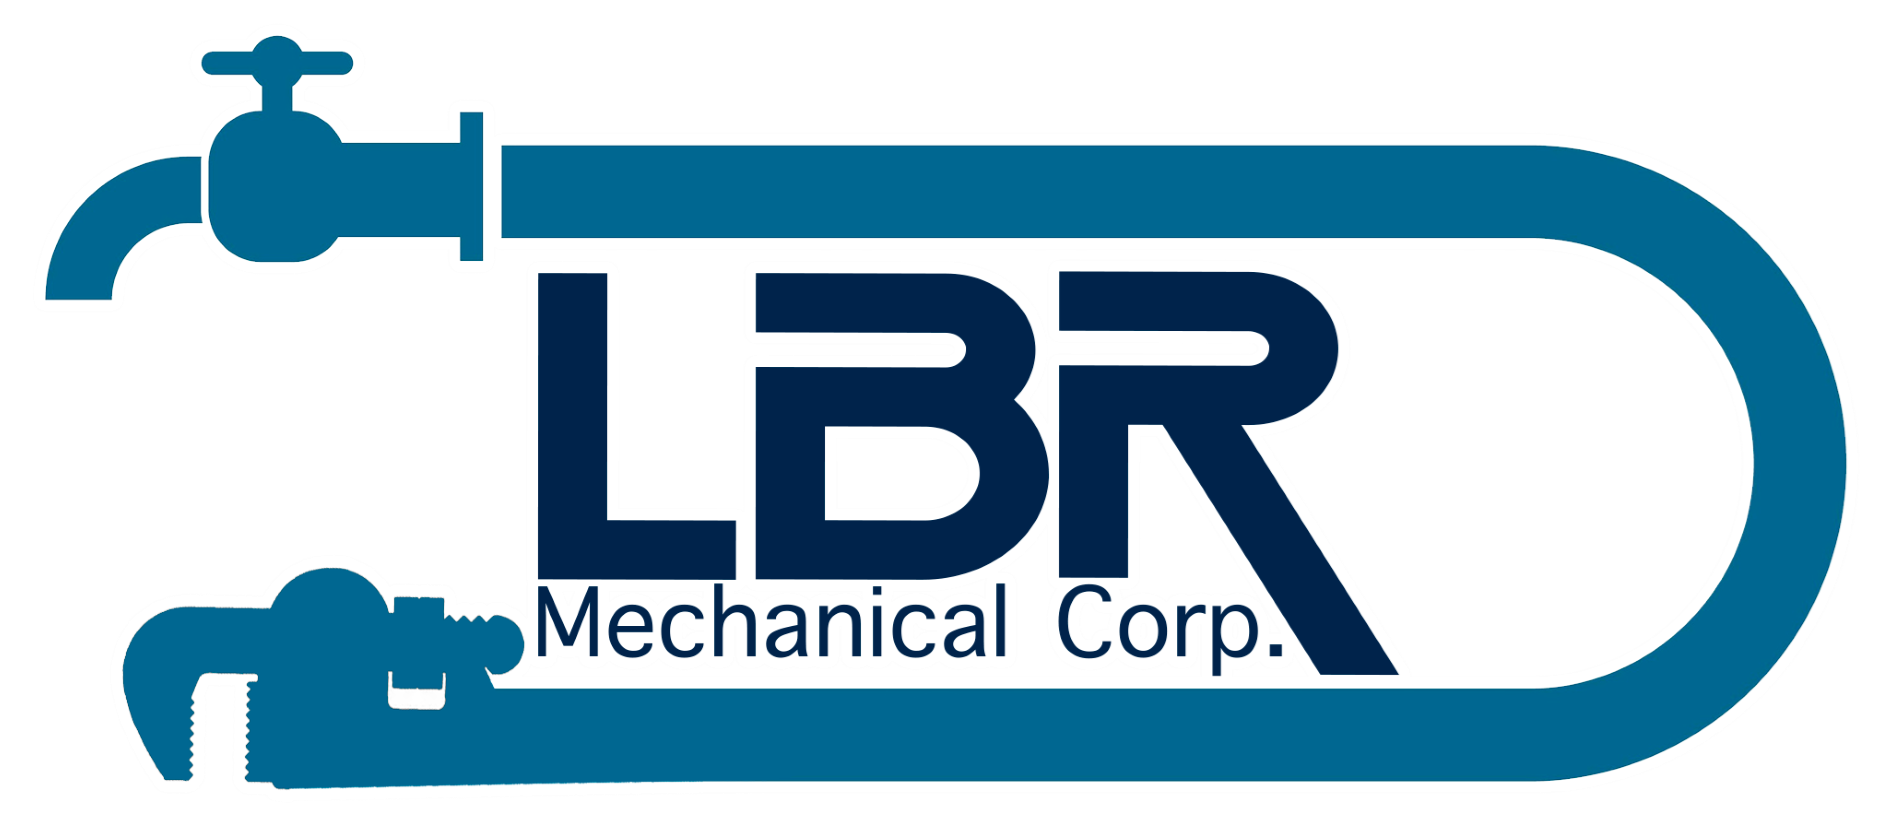 LBR Mechanical Corp - Logo